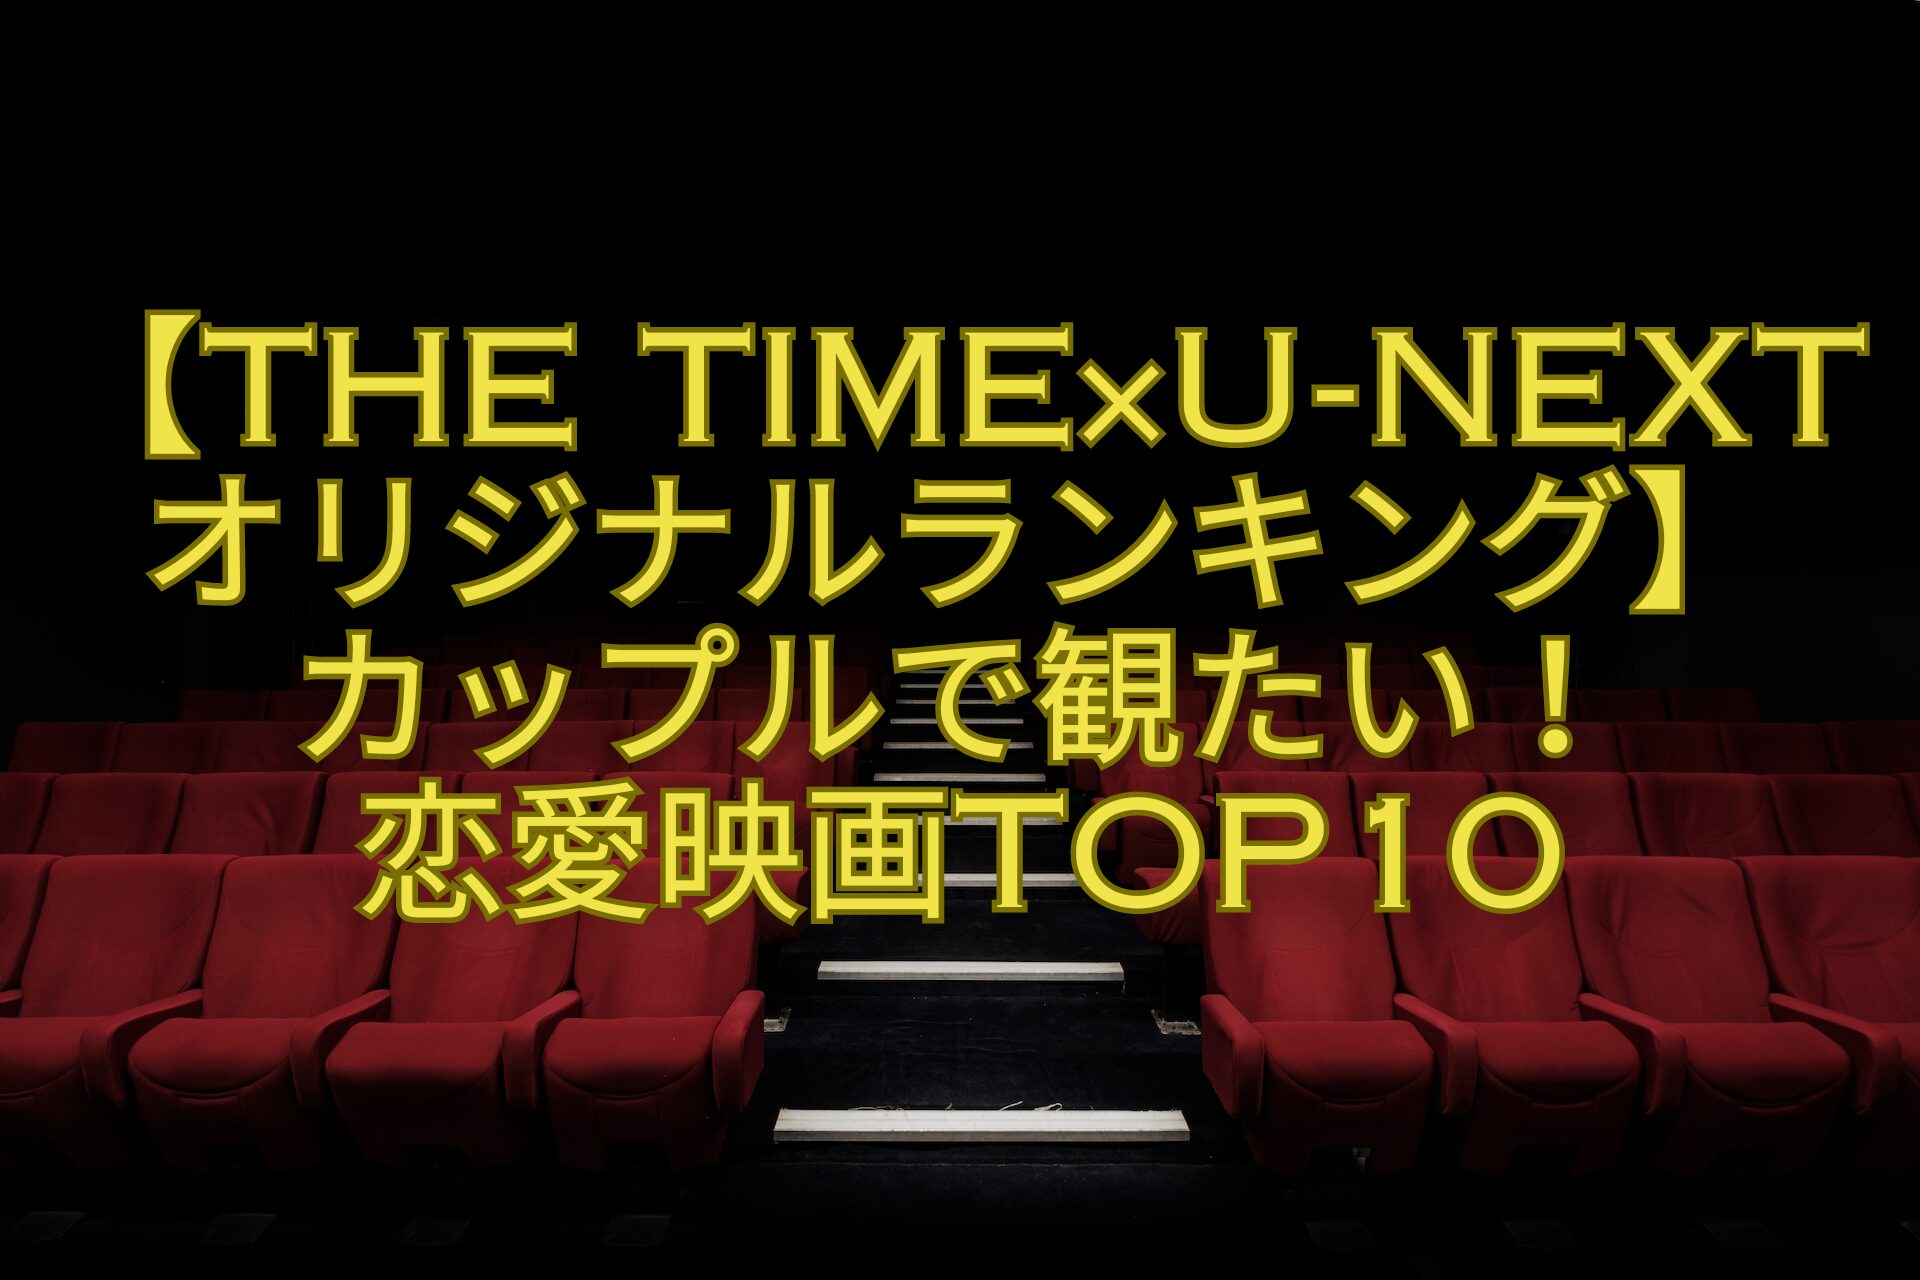 【THE-TIME×U-NEXTオリジナルランキング】-カップルで観たい！-恋愛映画TOP10